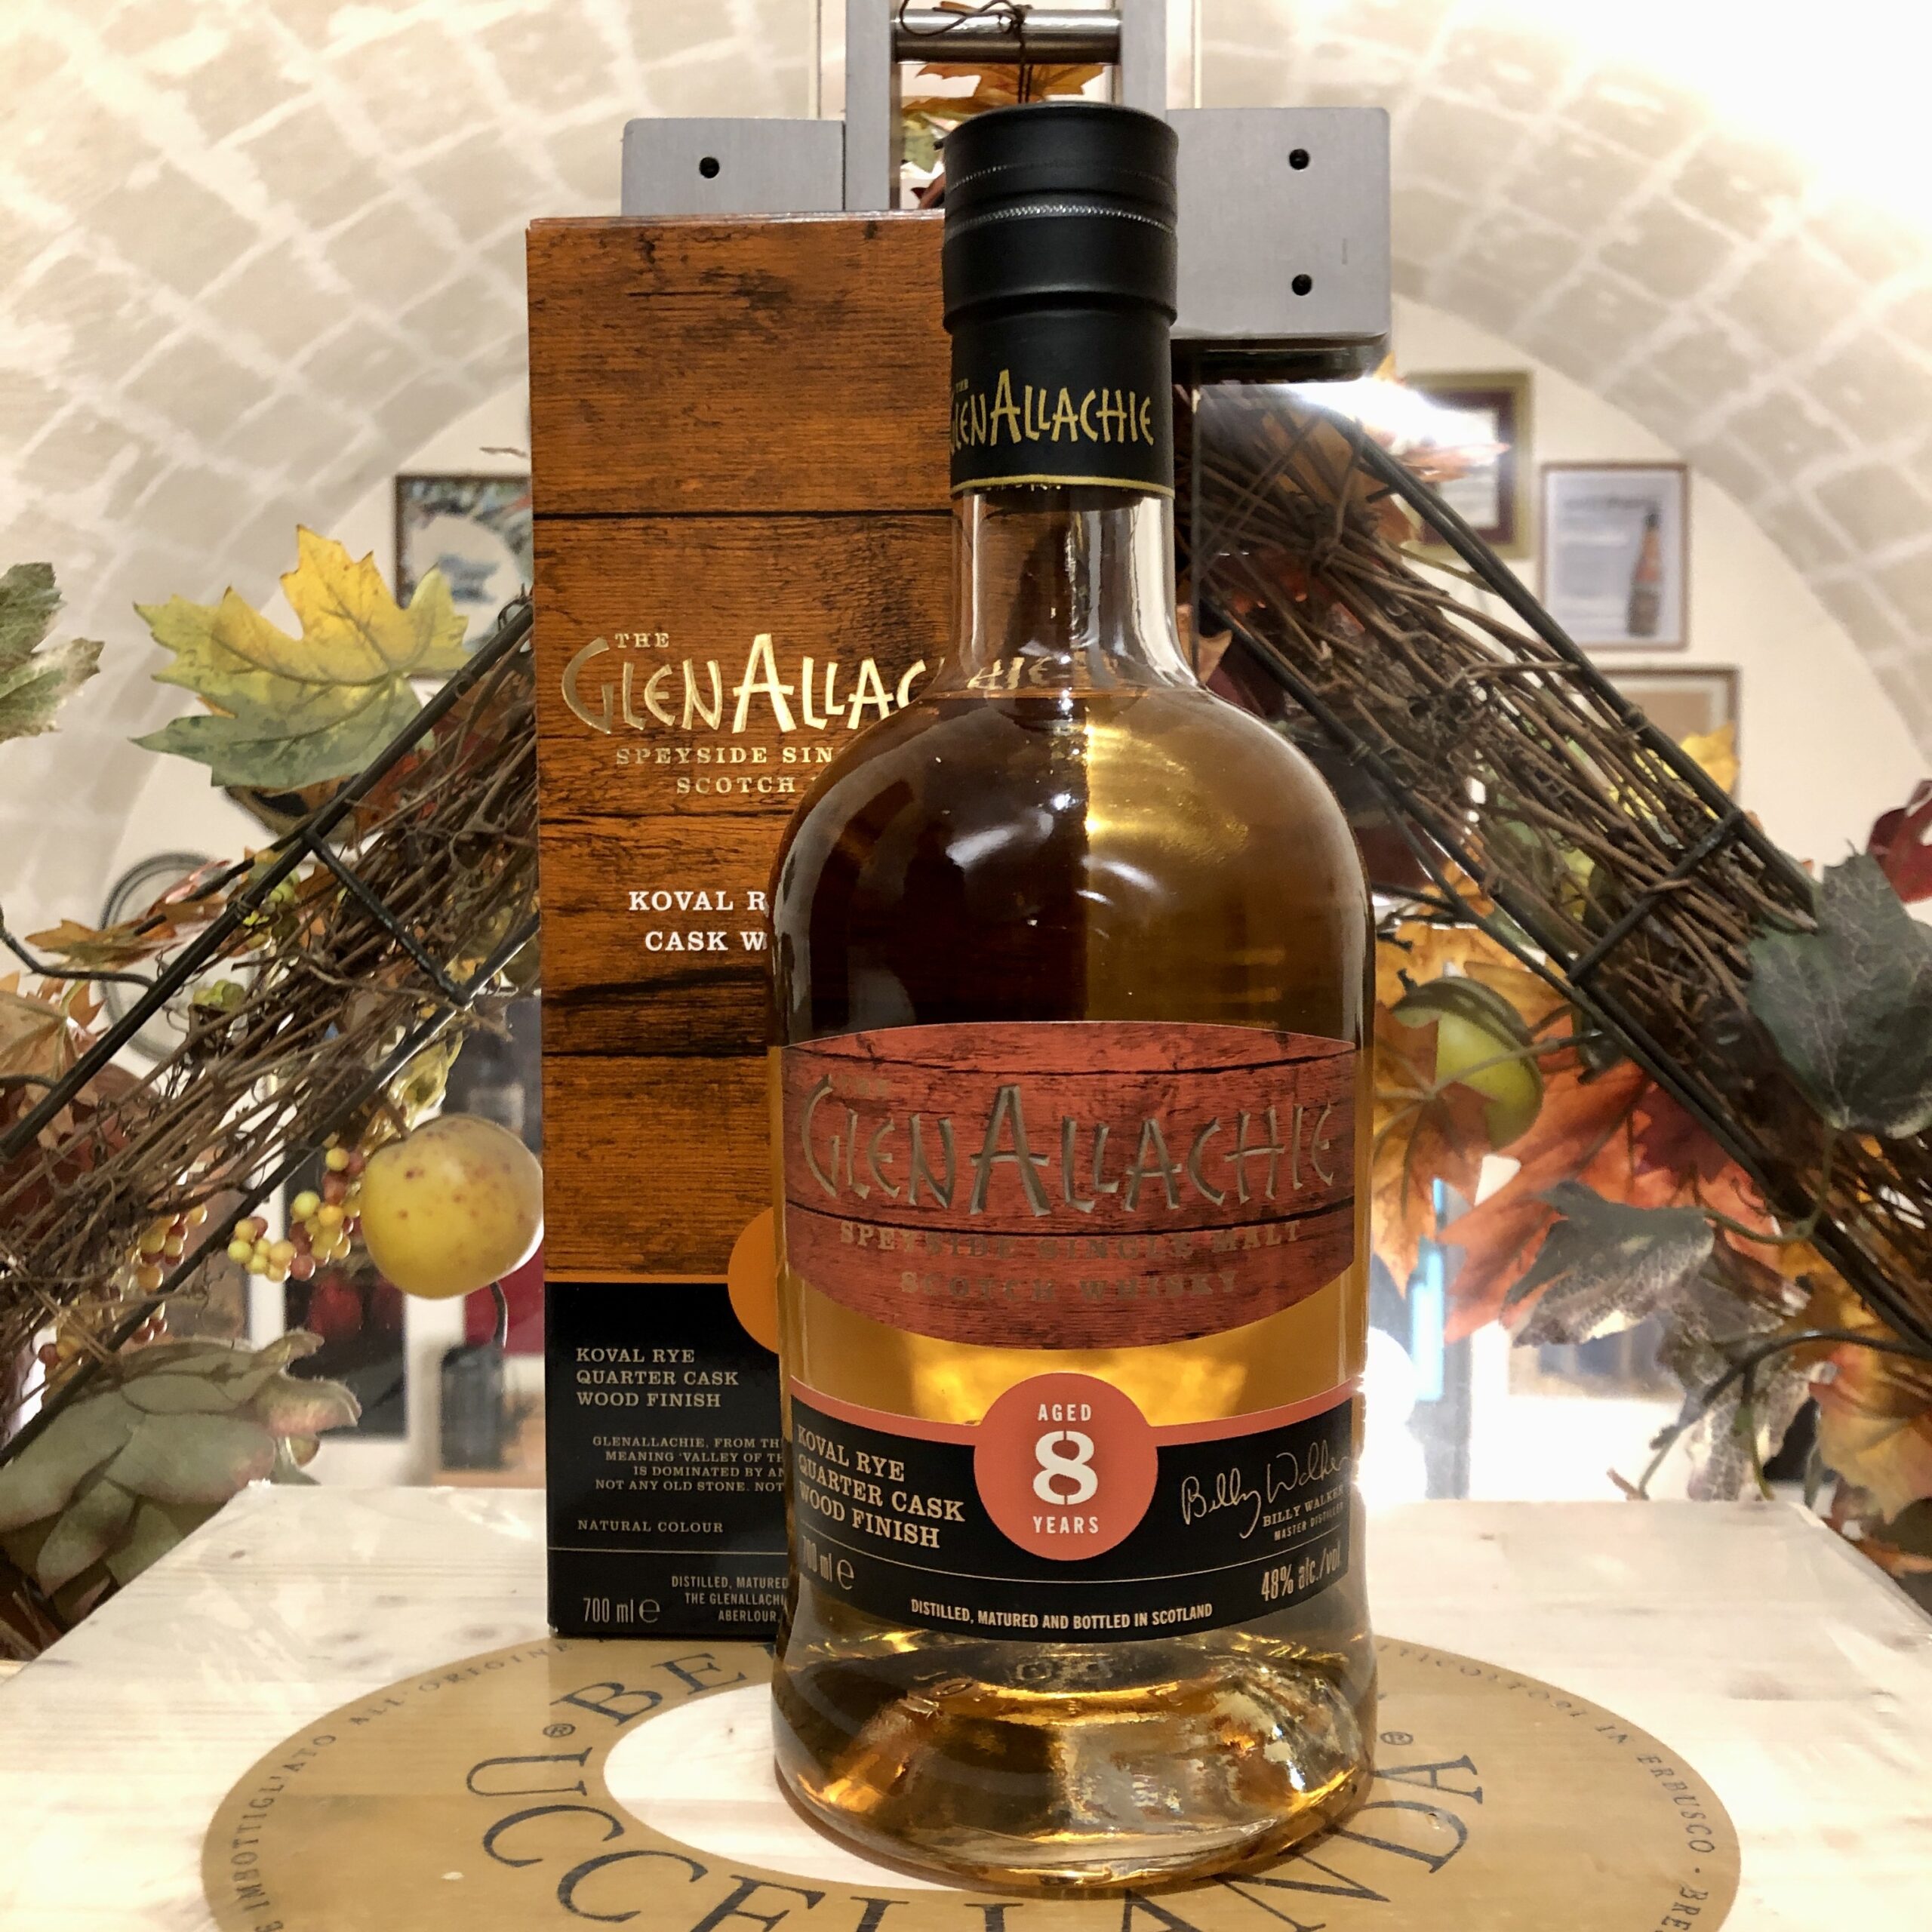 The GlenAllachie Speyside Single Malt Scotch Whisky 8 YO Koval Rye Quarter Cask Wood Finish